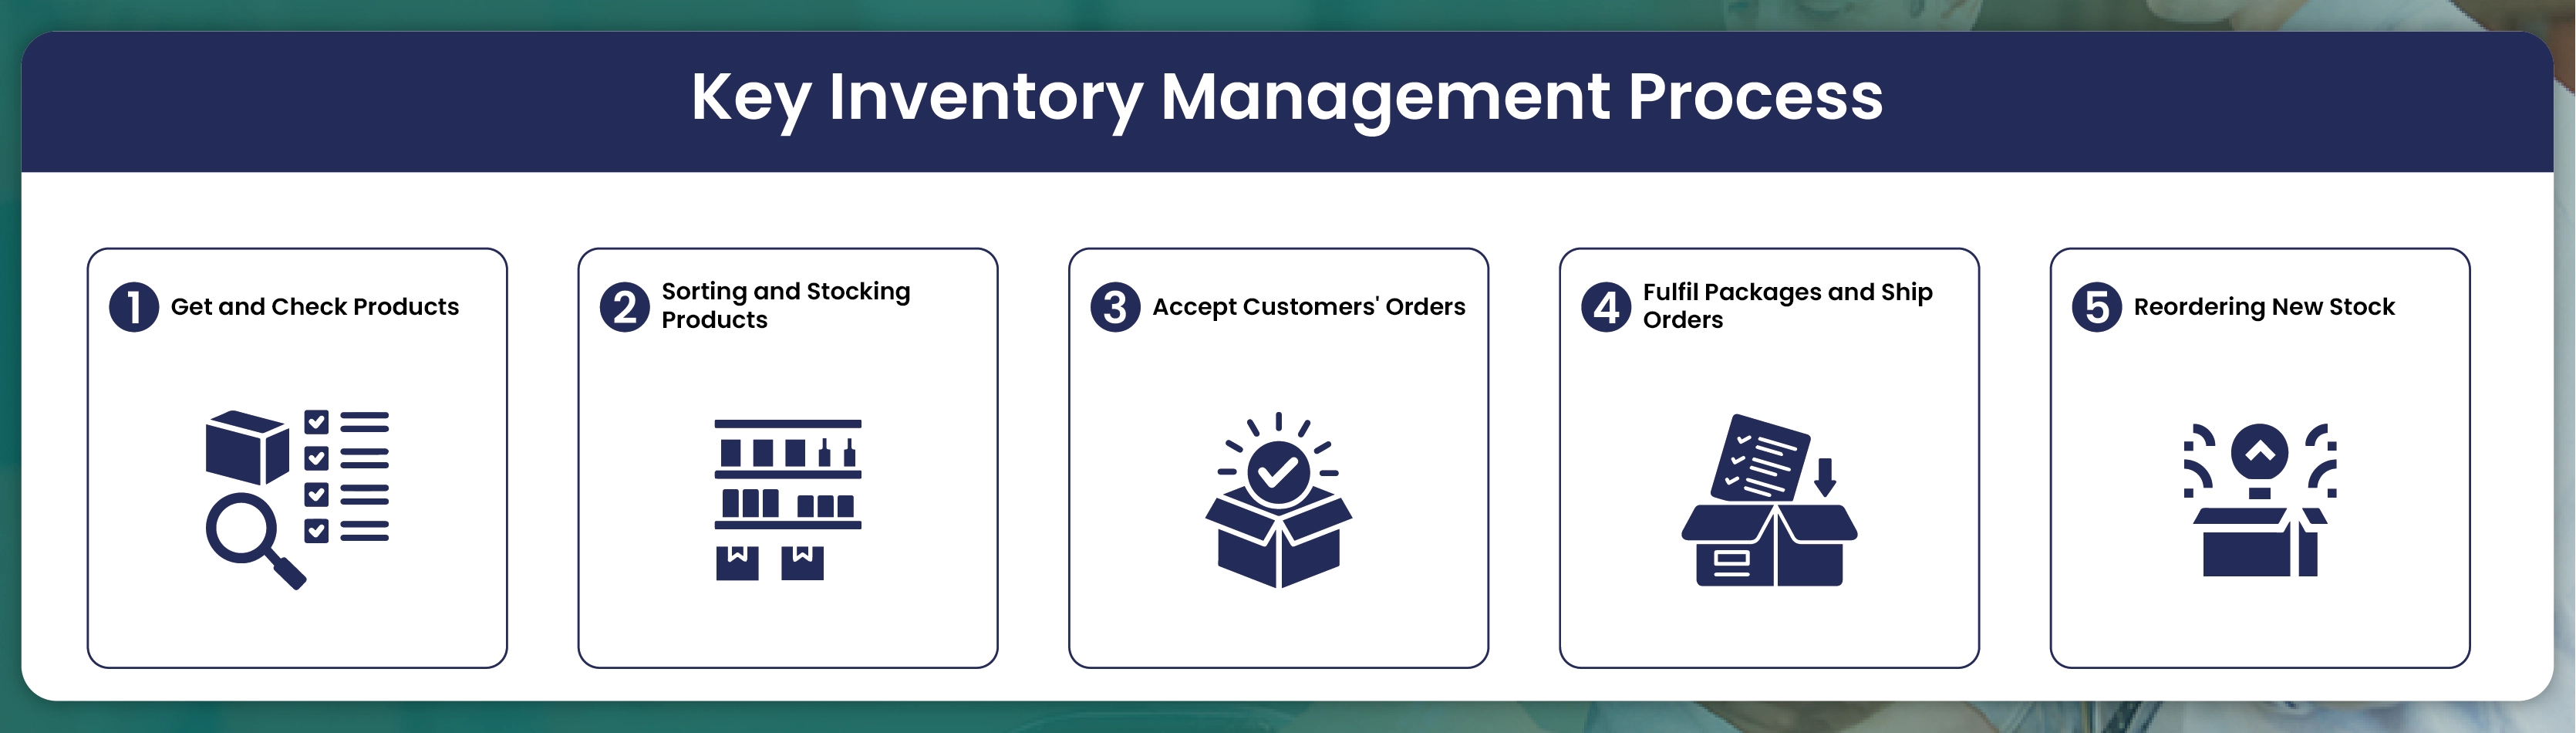 Key-Inventory-Management-Process-01